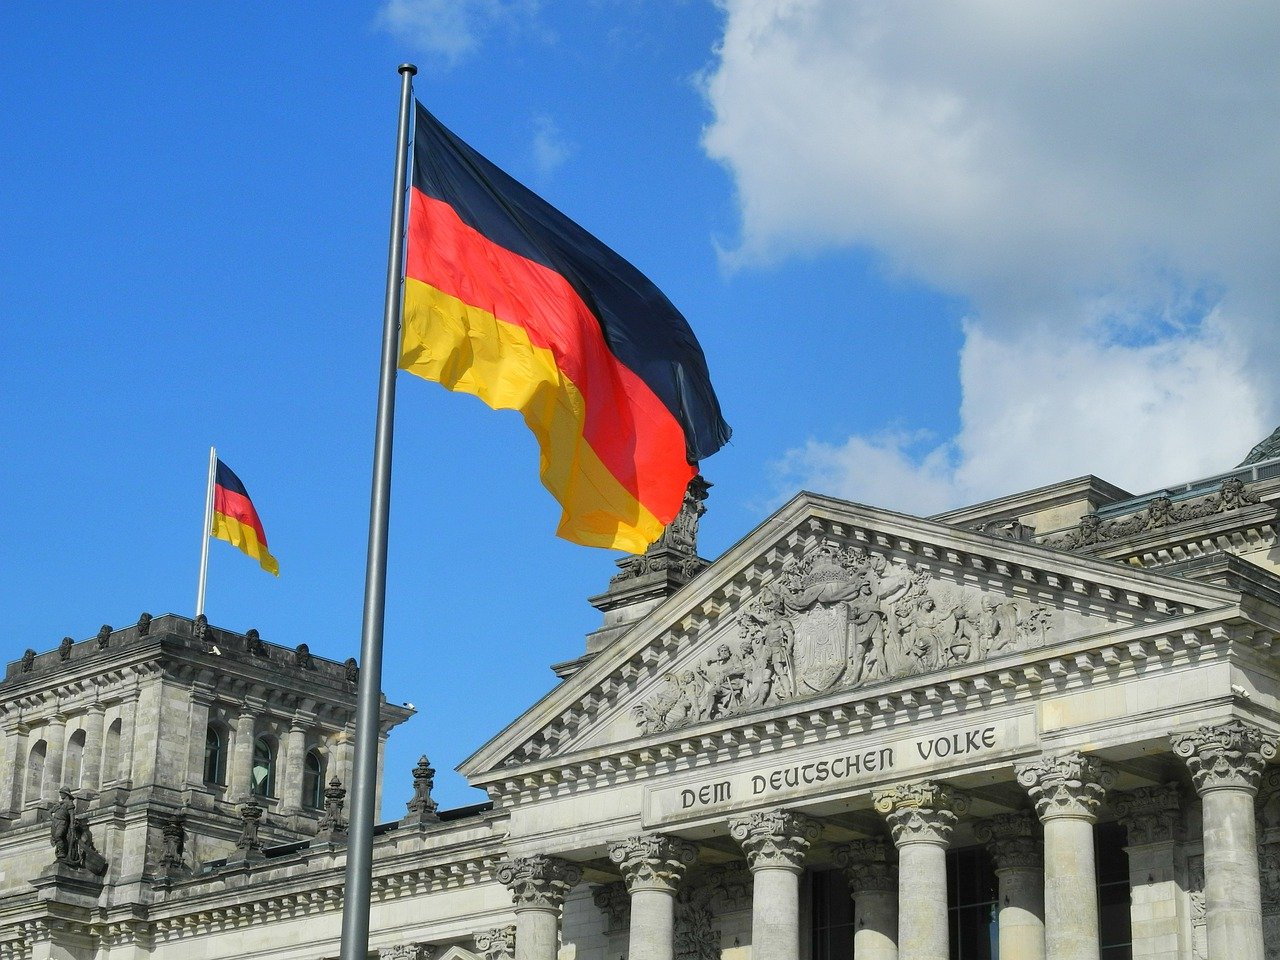 Reichstag - Gmach parlamentu Rzeszy w Berlinie